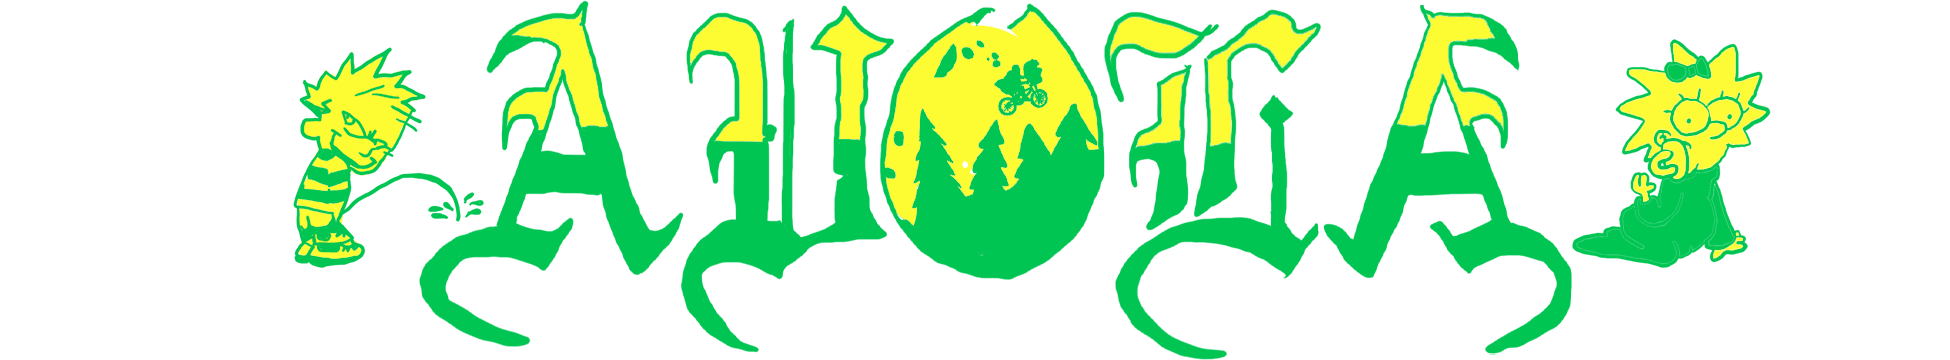 avola portland oregon logo green serif font